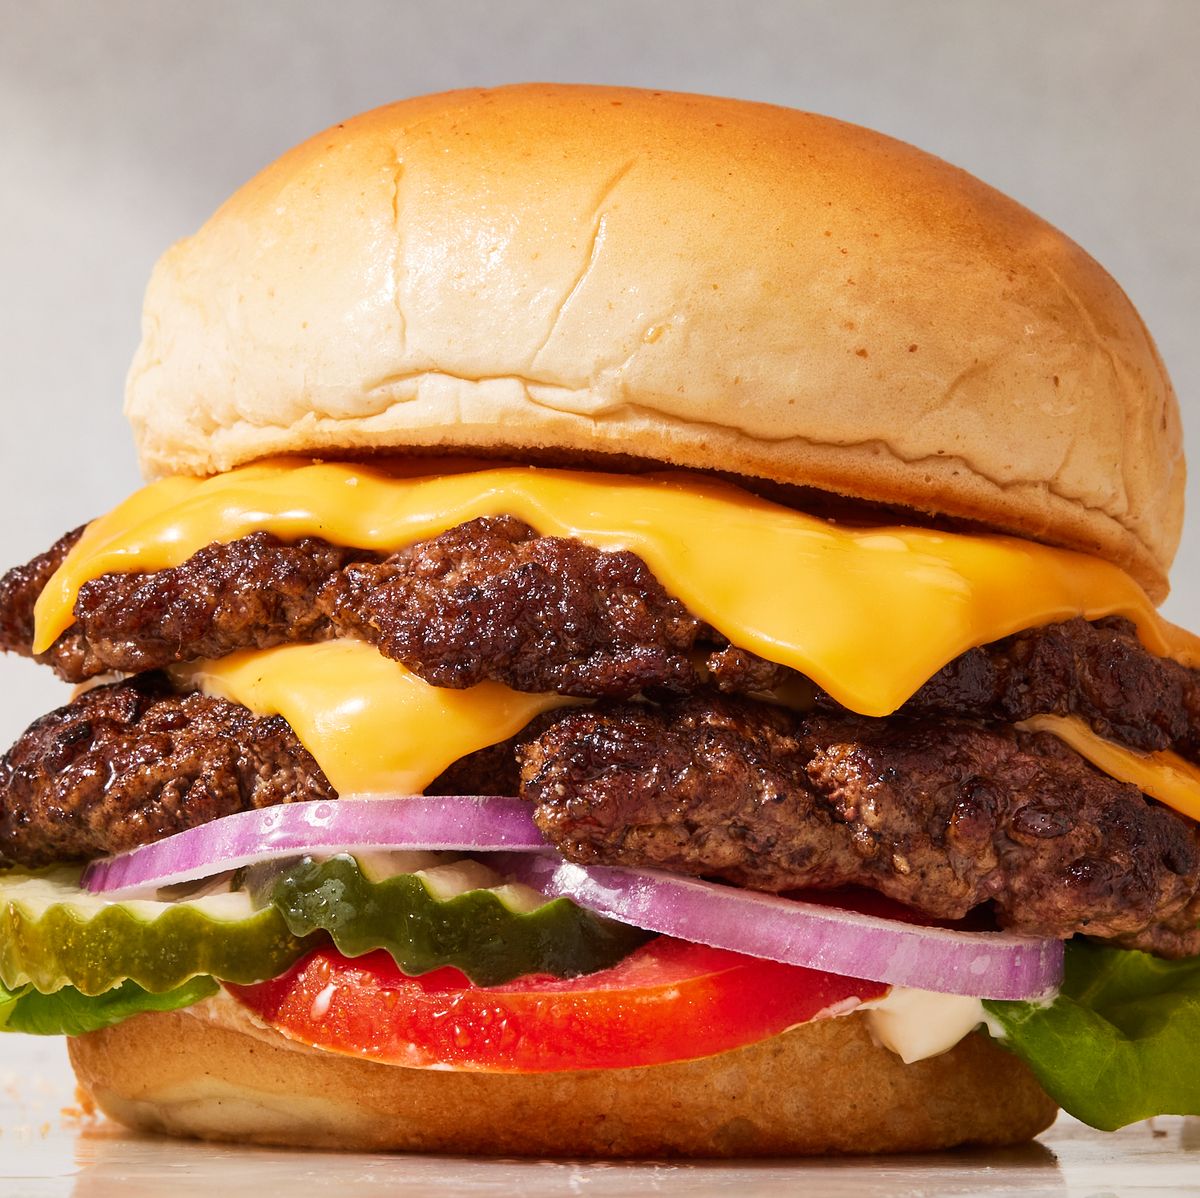 Best Smash Burger Recipe - How to Make Smash Burgers